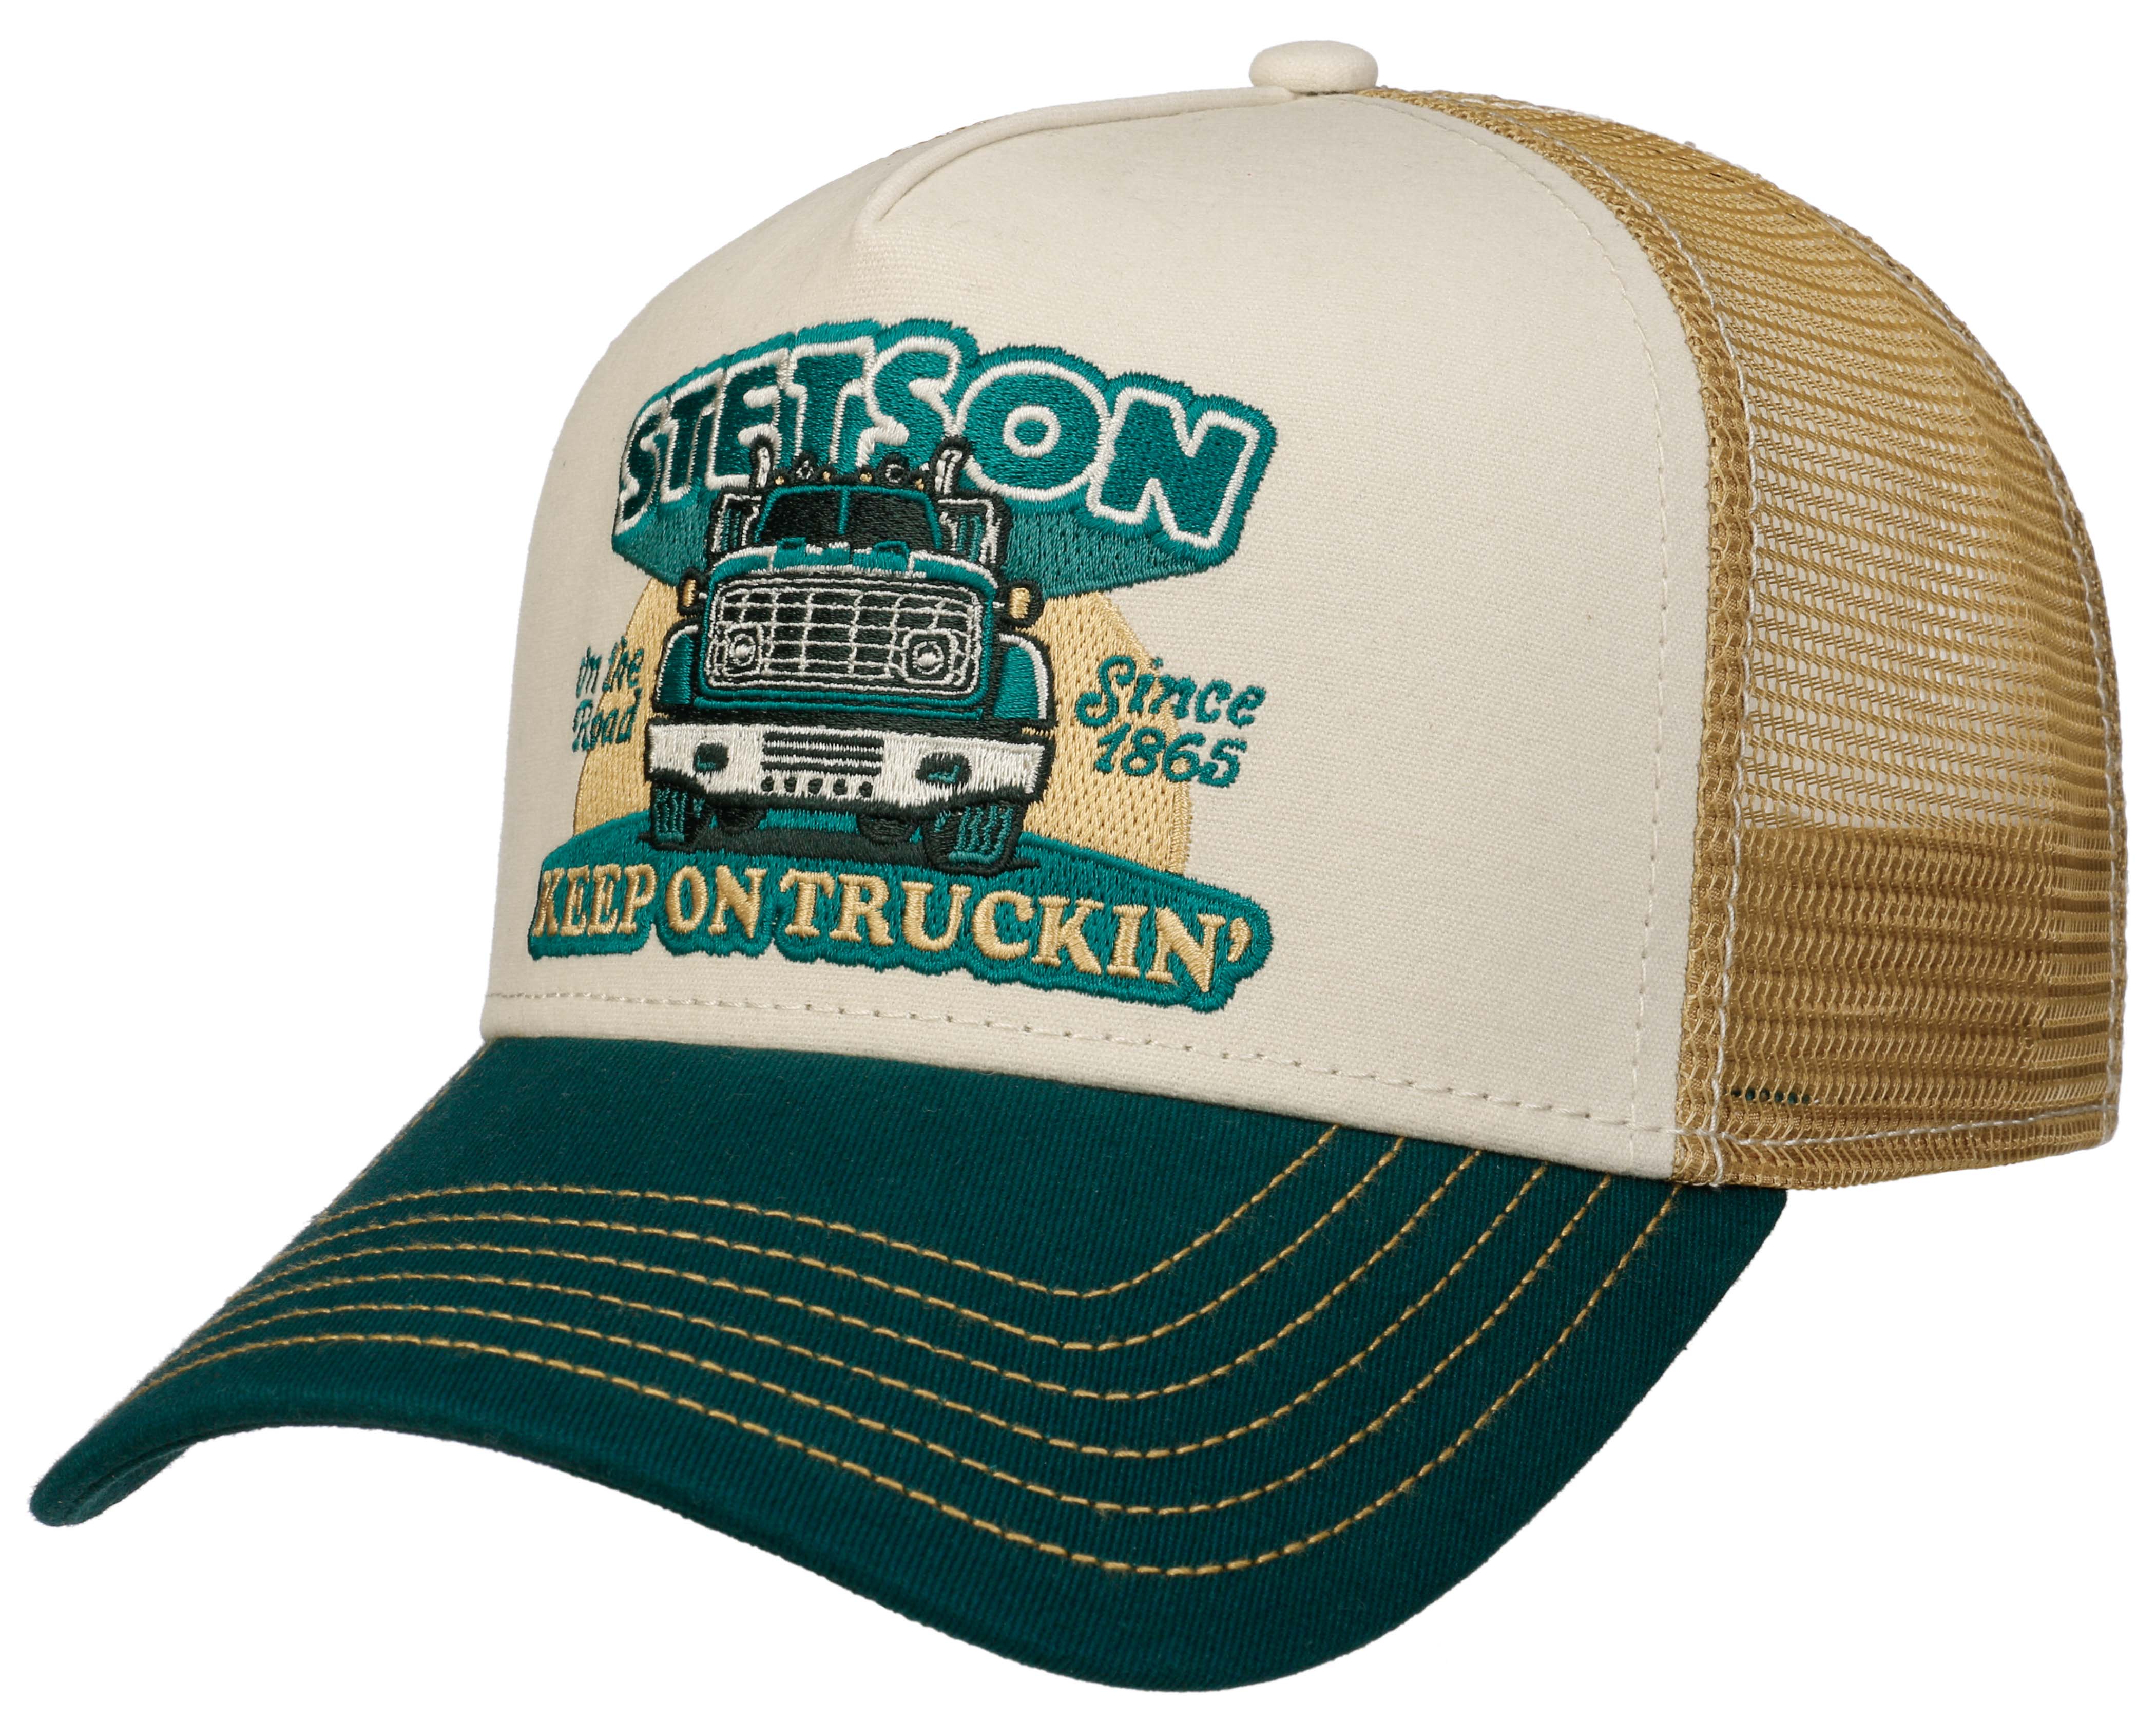 Stetson Stetson Men's Trucker Cap Keep On Trucking Green/Sand OneSize, Green/Sand